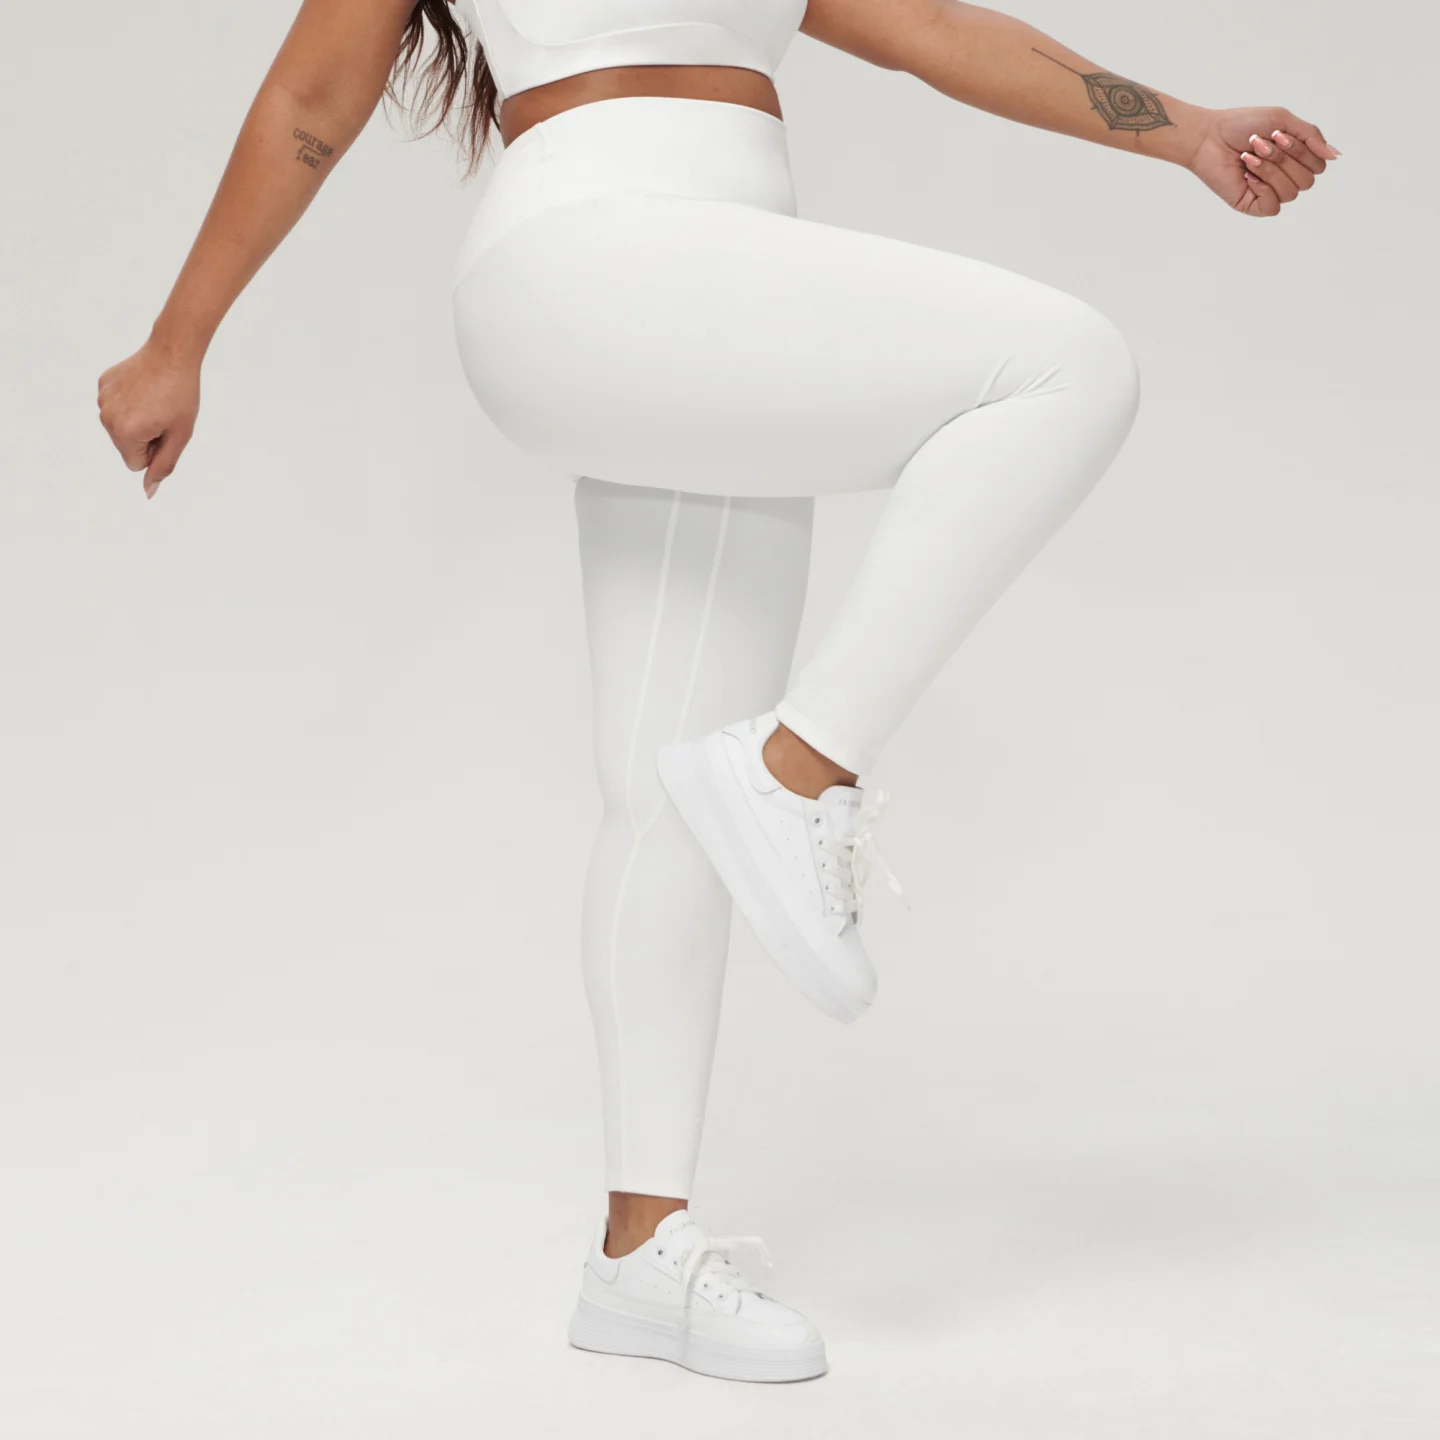 Integrity Activewear Yoga Pants Grey Curve